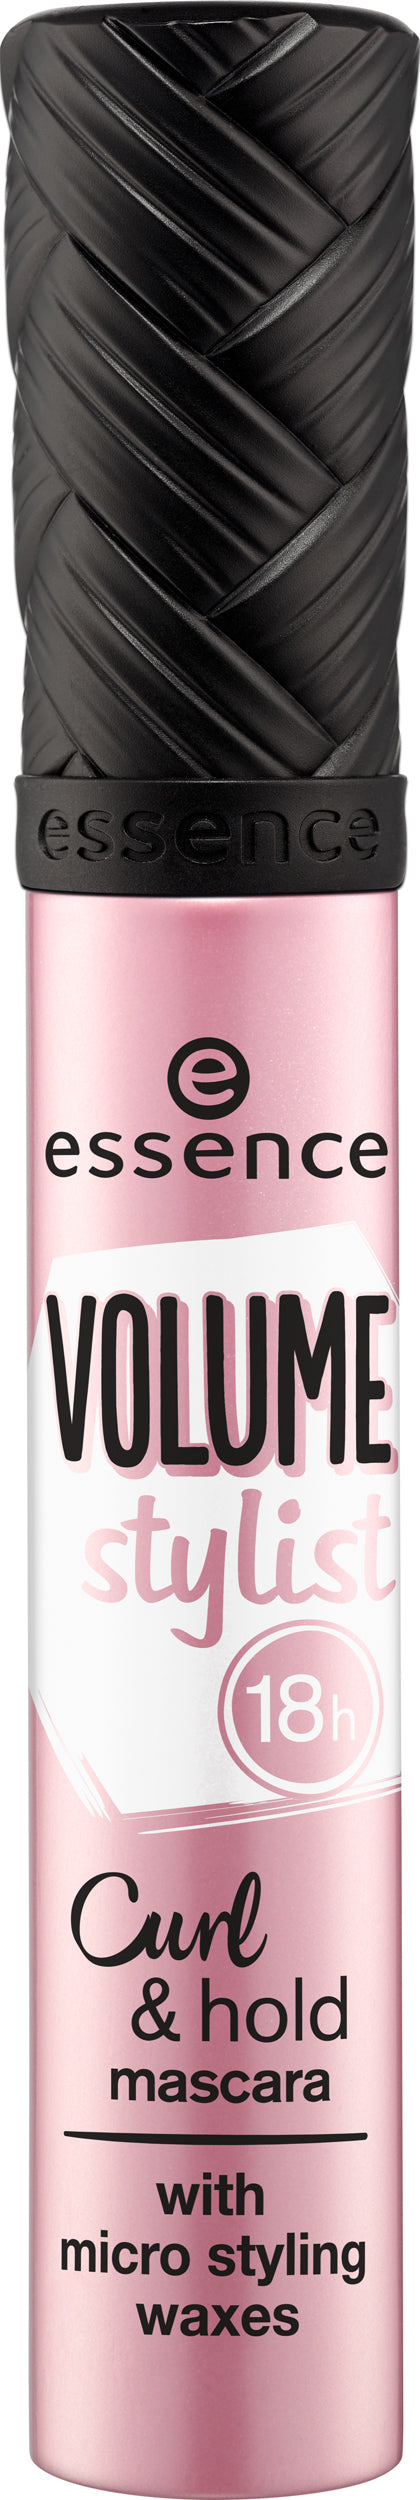 Essence Vol. Stylist Curl&Hold Mascara